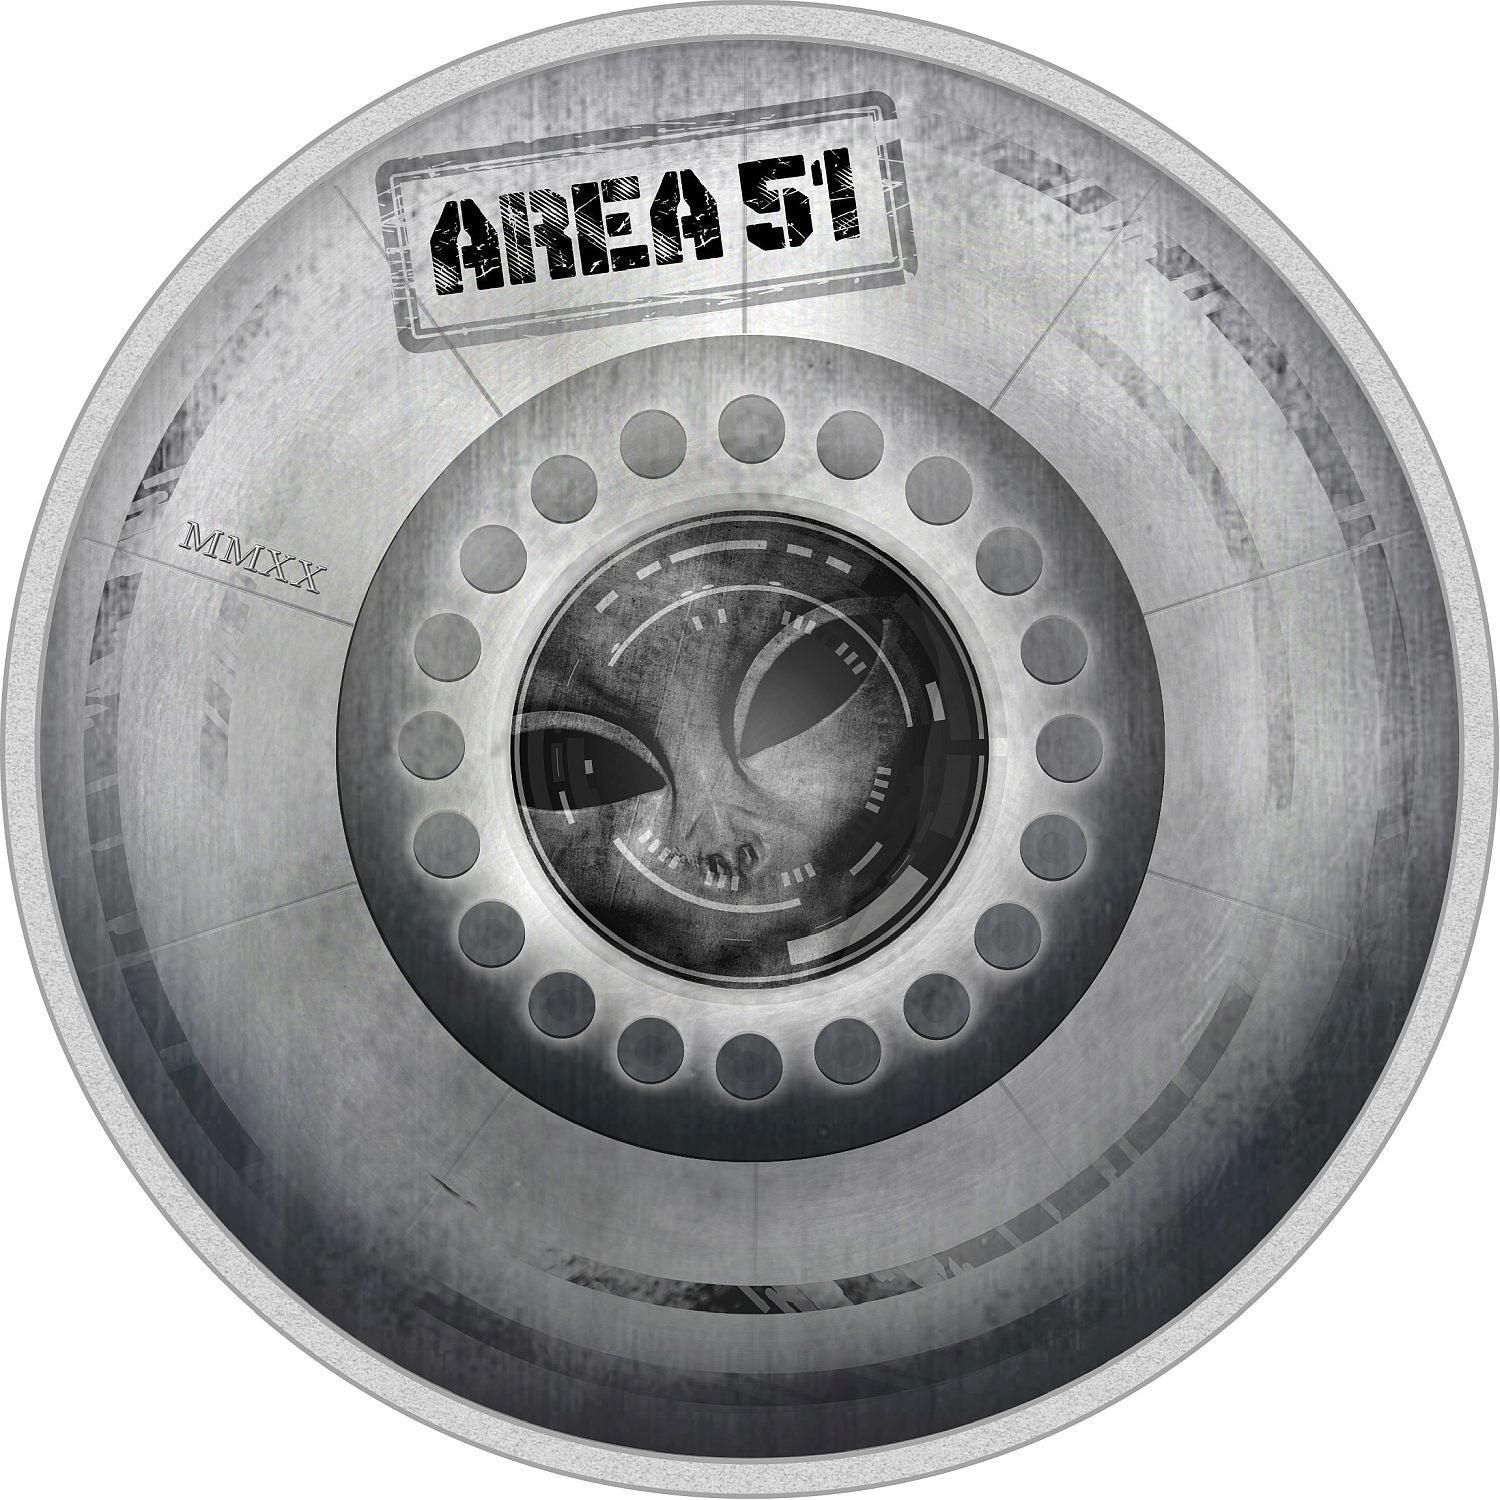 AREA 51 UFO Alien Great Conspiracies 2 Oz Silver Coin $10 Palau 2020 - PARTHAVA COIN